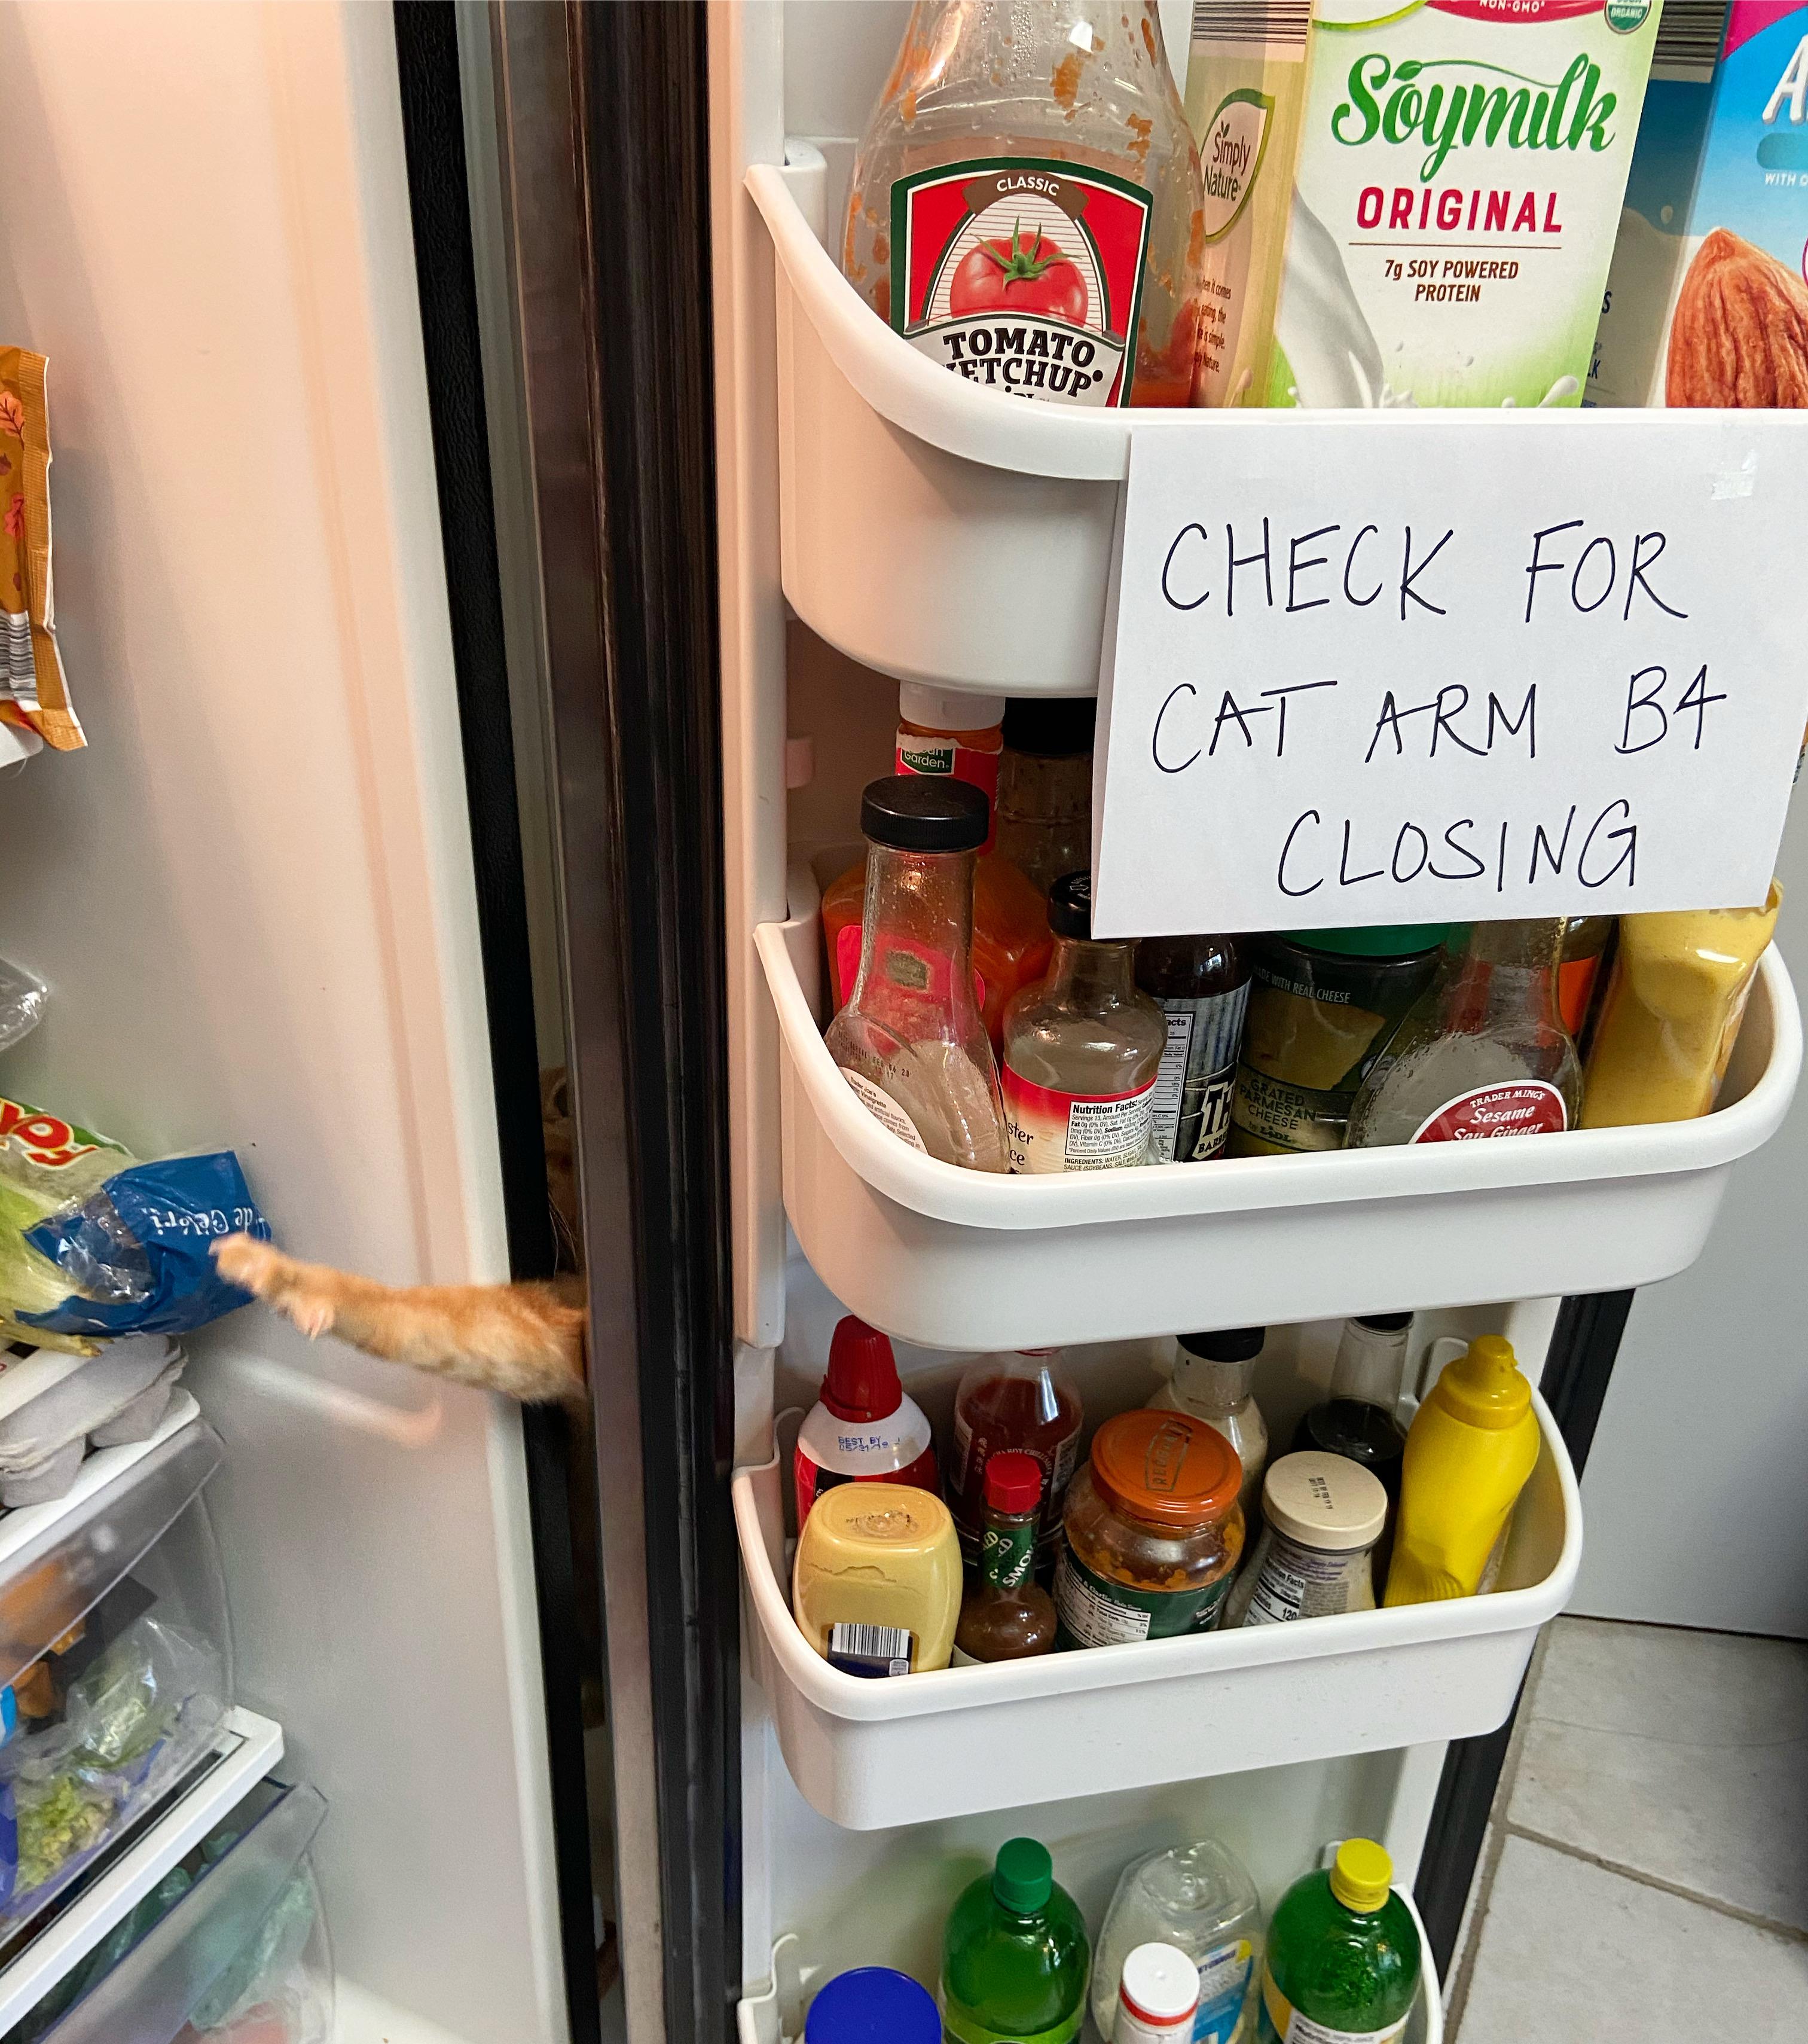 refrigerator - Soymilk Original . Tomato Etchup Check For Cat Arm B4 Closing